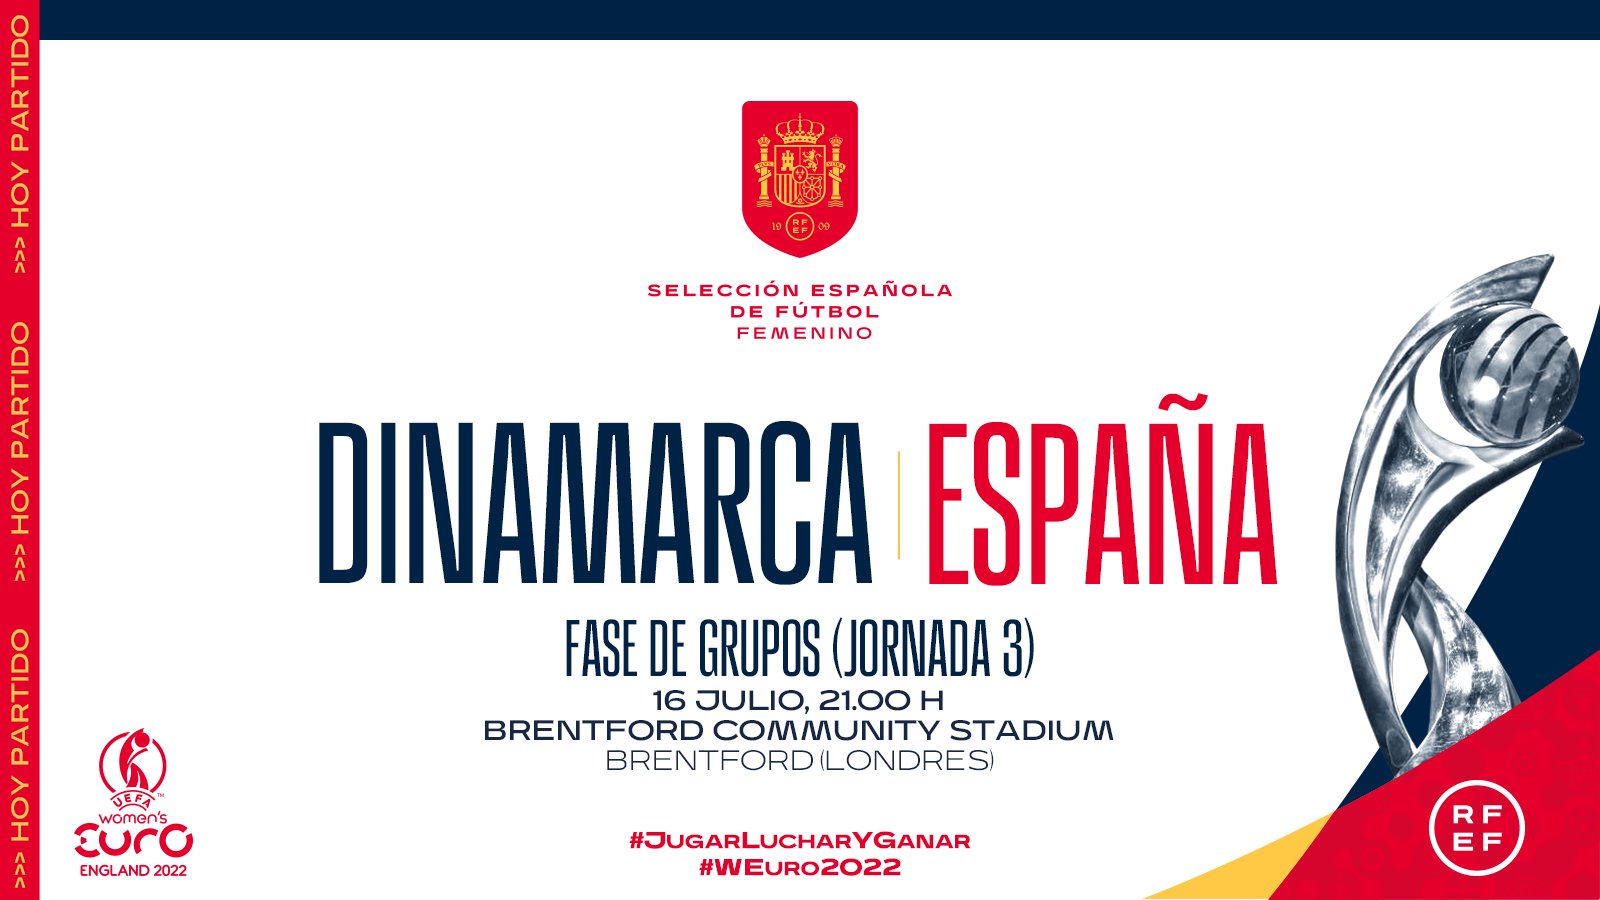 Selección Española Femenina Fútbol on "🙌 ¡¡𝗛𝗢𝗬 𝗝𝗨𝗚𝗔𝗠𝗢𝗦 𝗨𝗡𝗔 𝗙𝗜𝗡𝗔𝗟!! ⚽ Dinamarca - España 🏆 Tercer partido de 𝗳𝗮𝘀𝗲 𝗴𝗿𝘂𝗽𝗼𝘀 🕘 21:00 (hora peninsular española) 🏟 Brentford Community